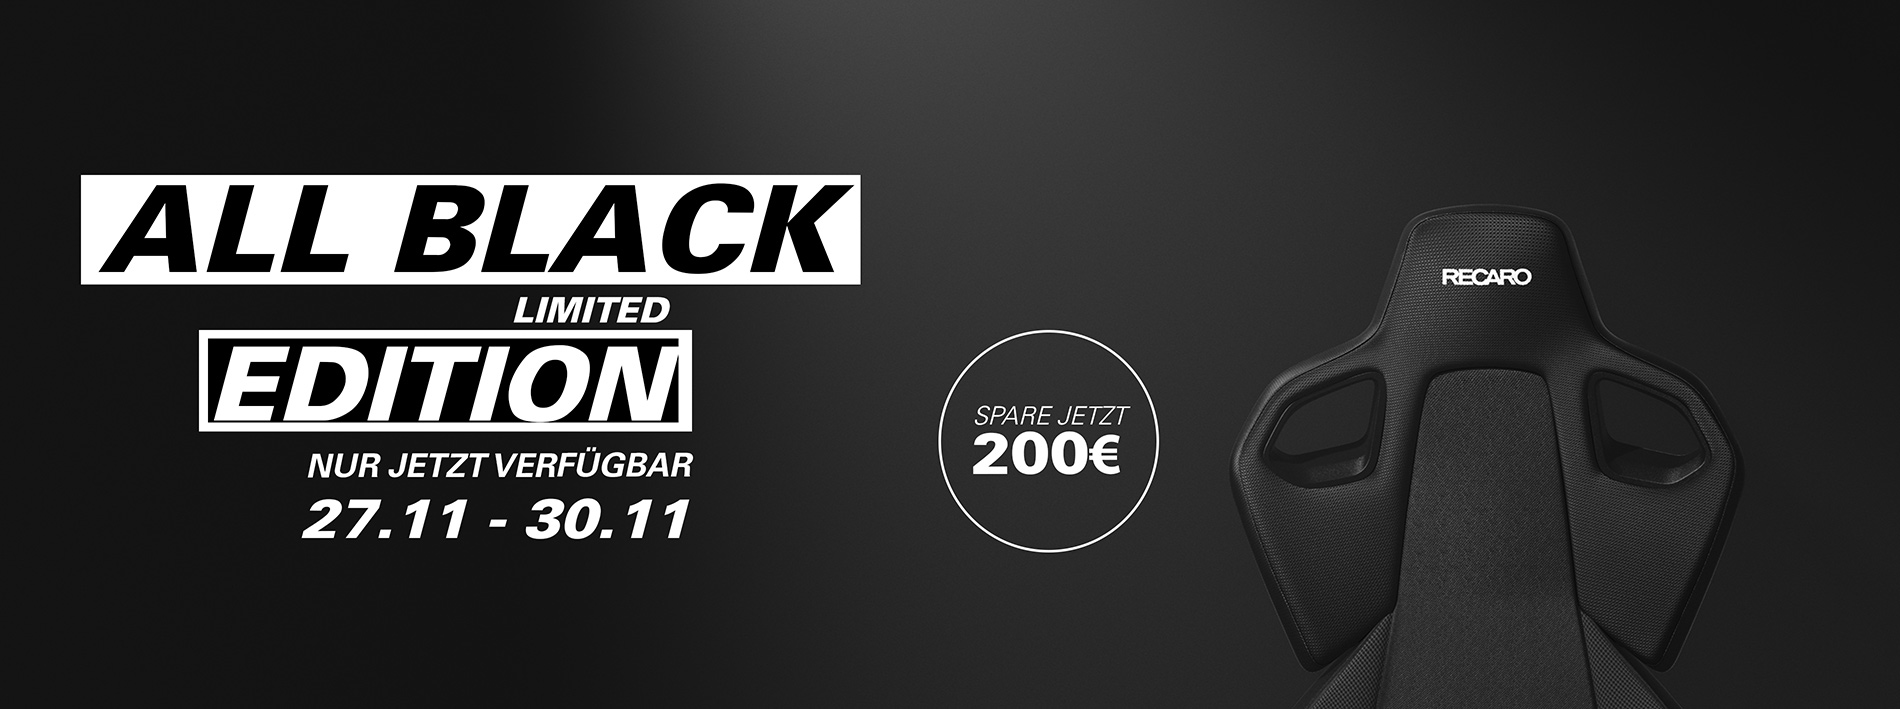 recaro-all-black-limited-edition-cyber-week-2020